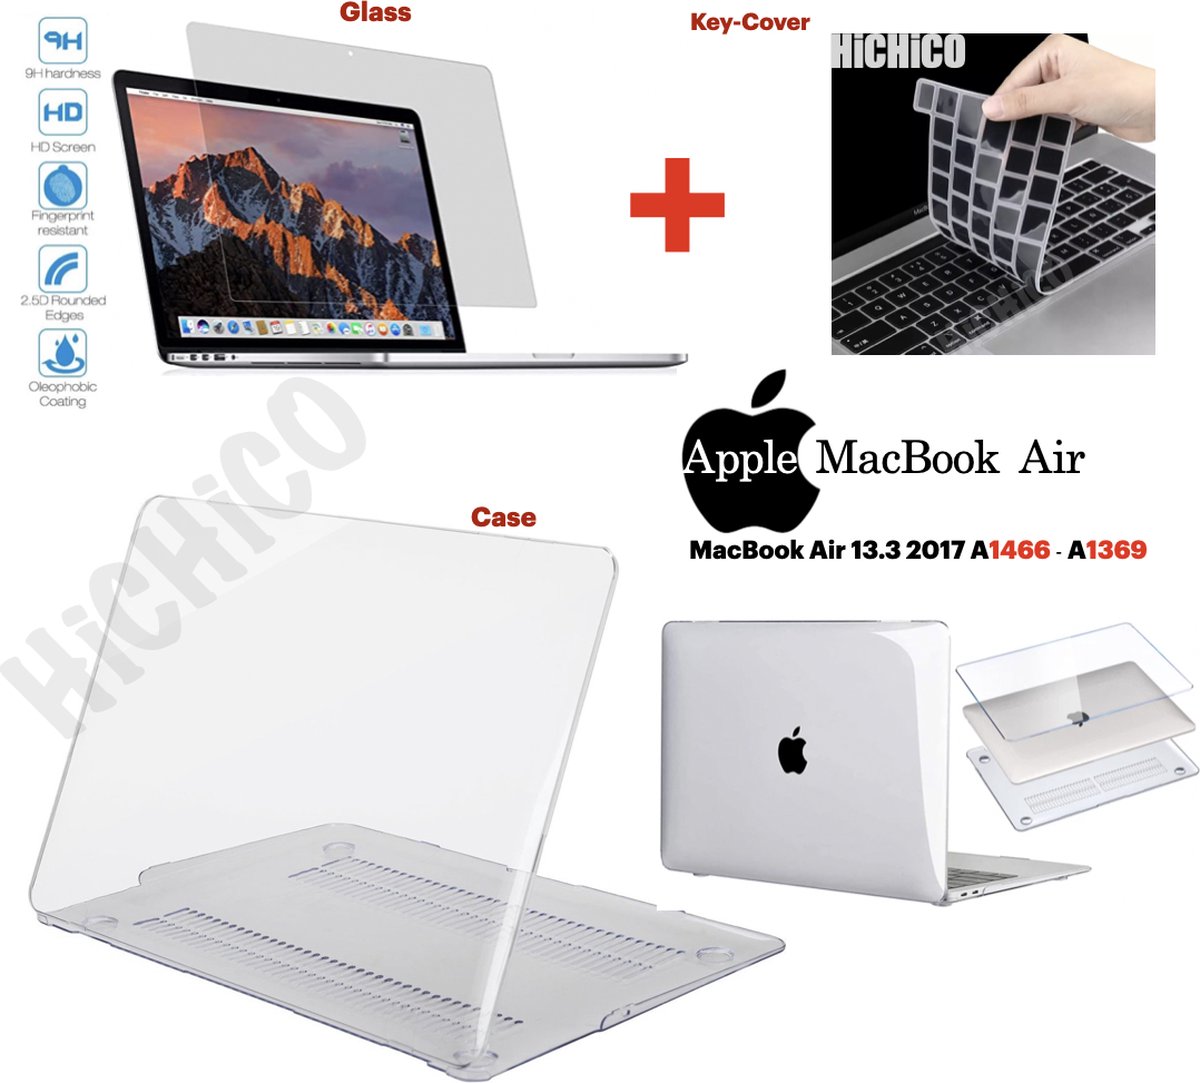 Macbook Air 13 inch 2017 Laptop Cover, Beschermglas en Key Cover | MacBook Air 2017 Case | Apple MacBook Air 13.3 2017 | MacBook Air Hard Case | MacBook Air 2017 Cover 13 Inch | Hardcase Beschermhoes MacBook Air A1369 / A1466 -- 3IN1 --- HiCHiCO®